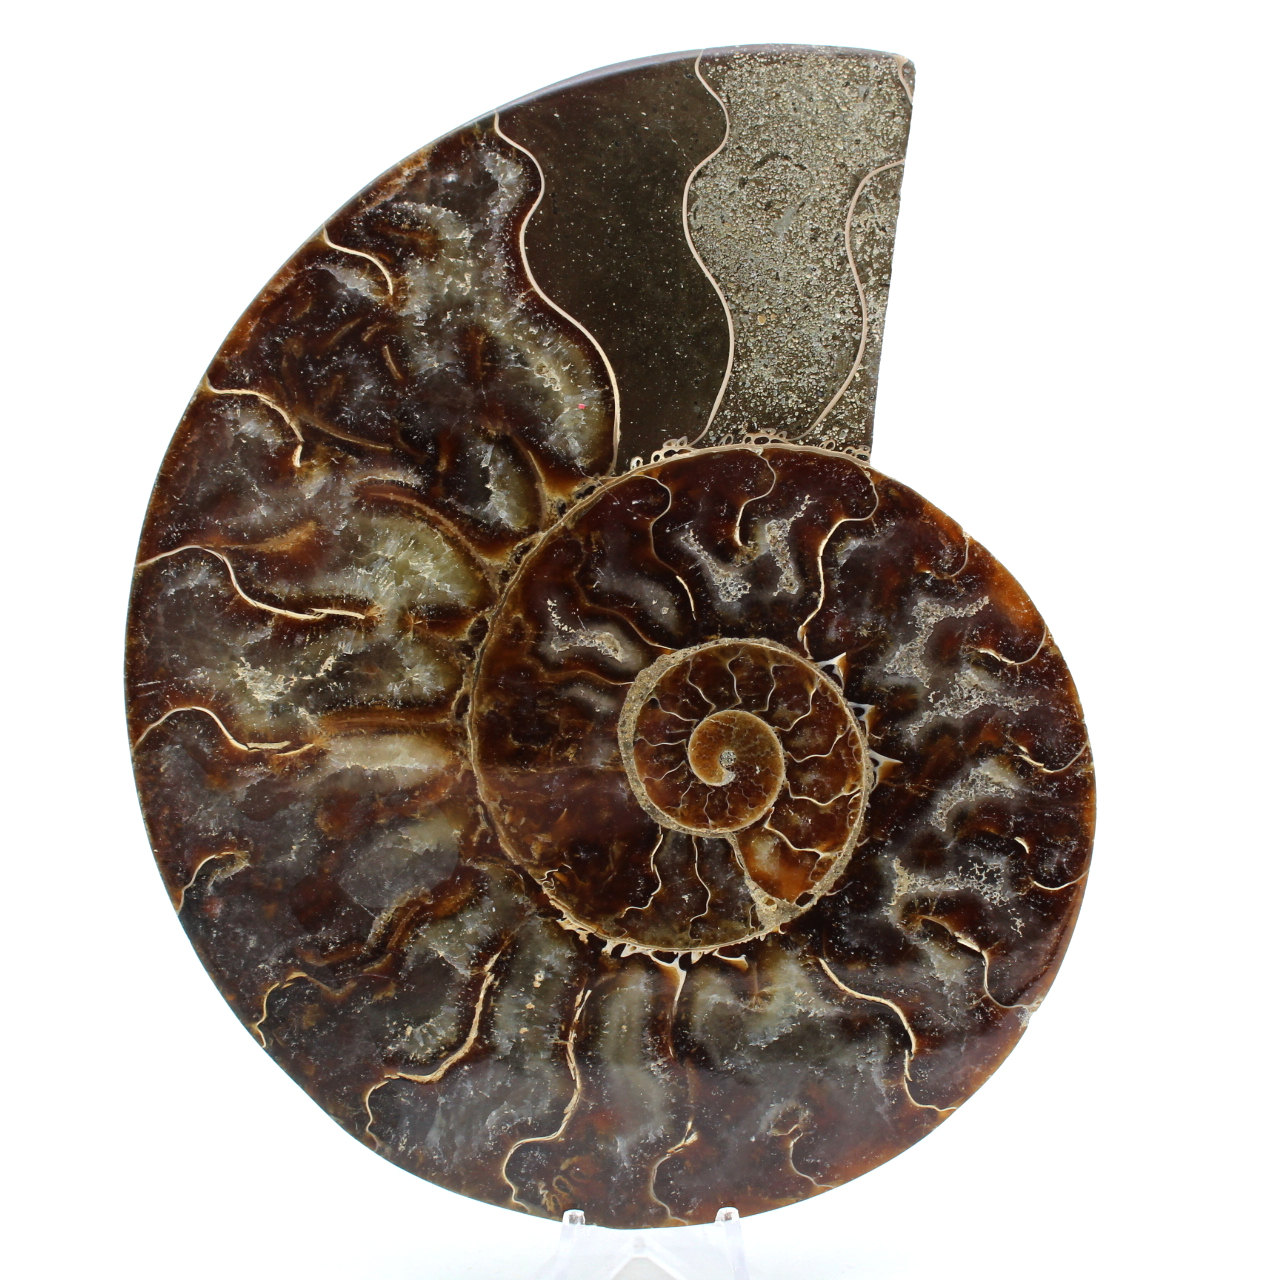 Ammonite from madagascar